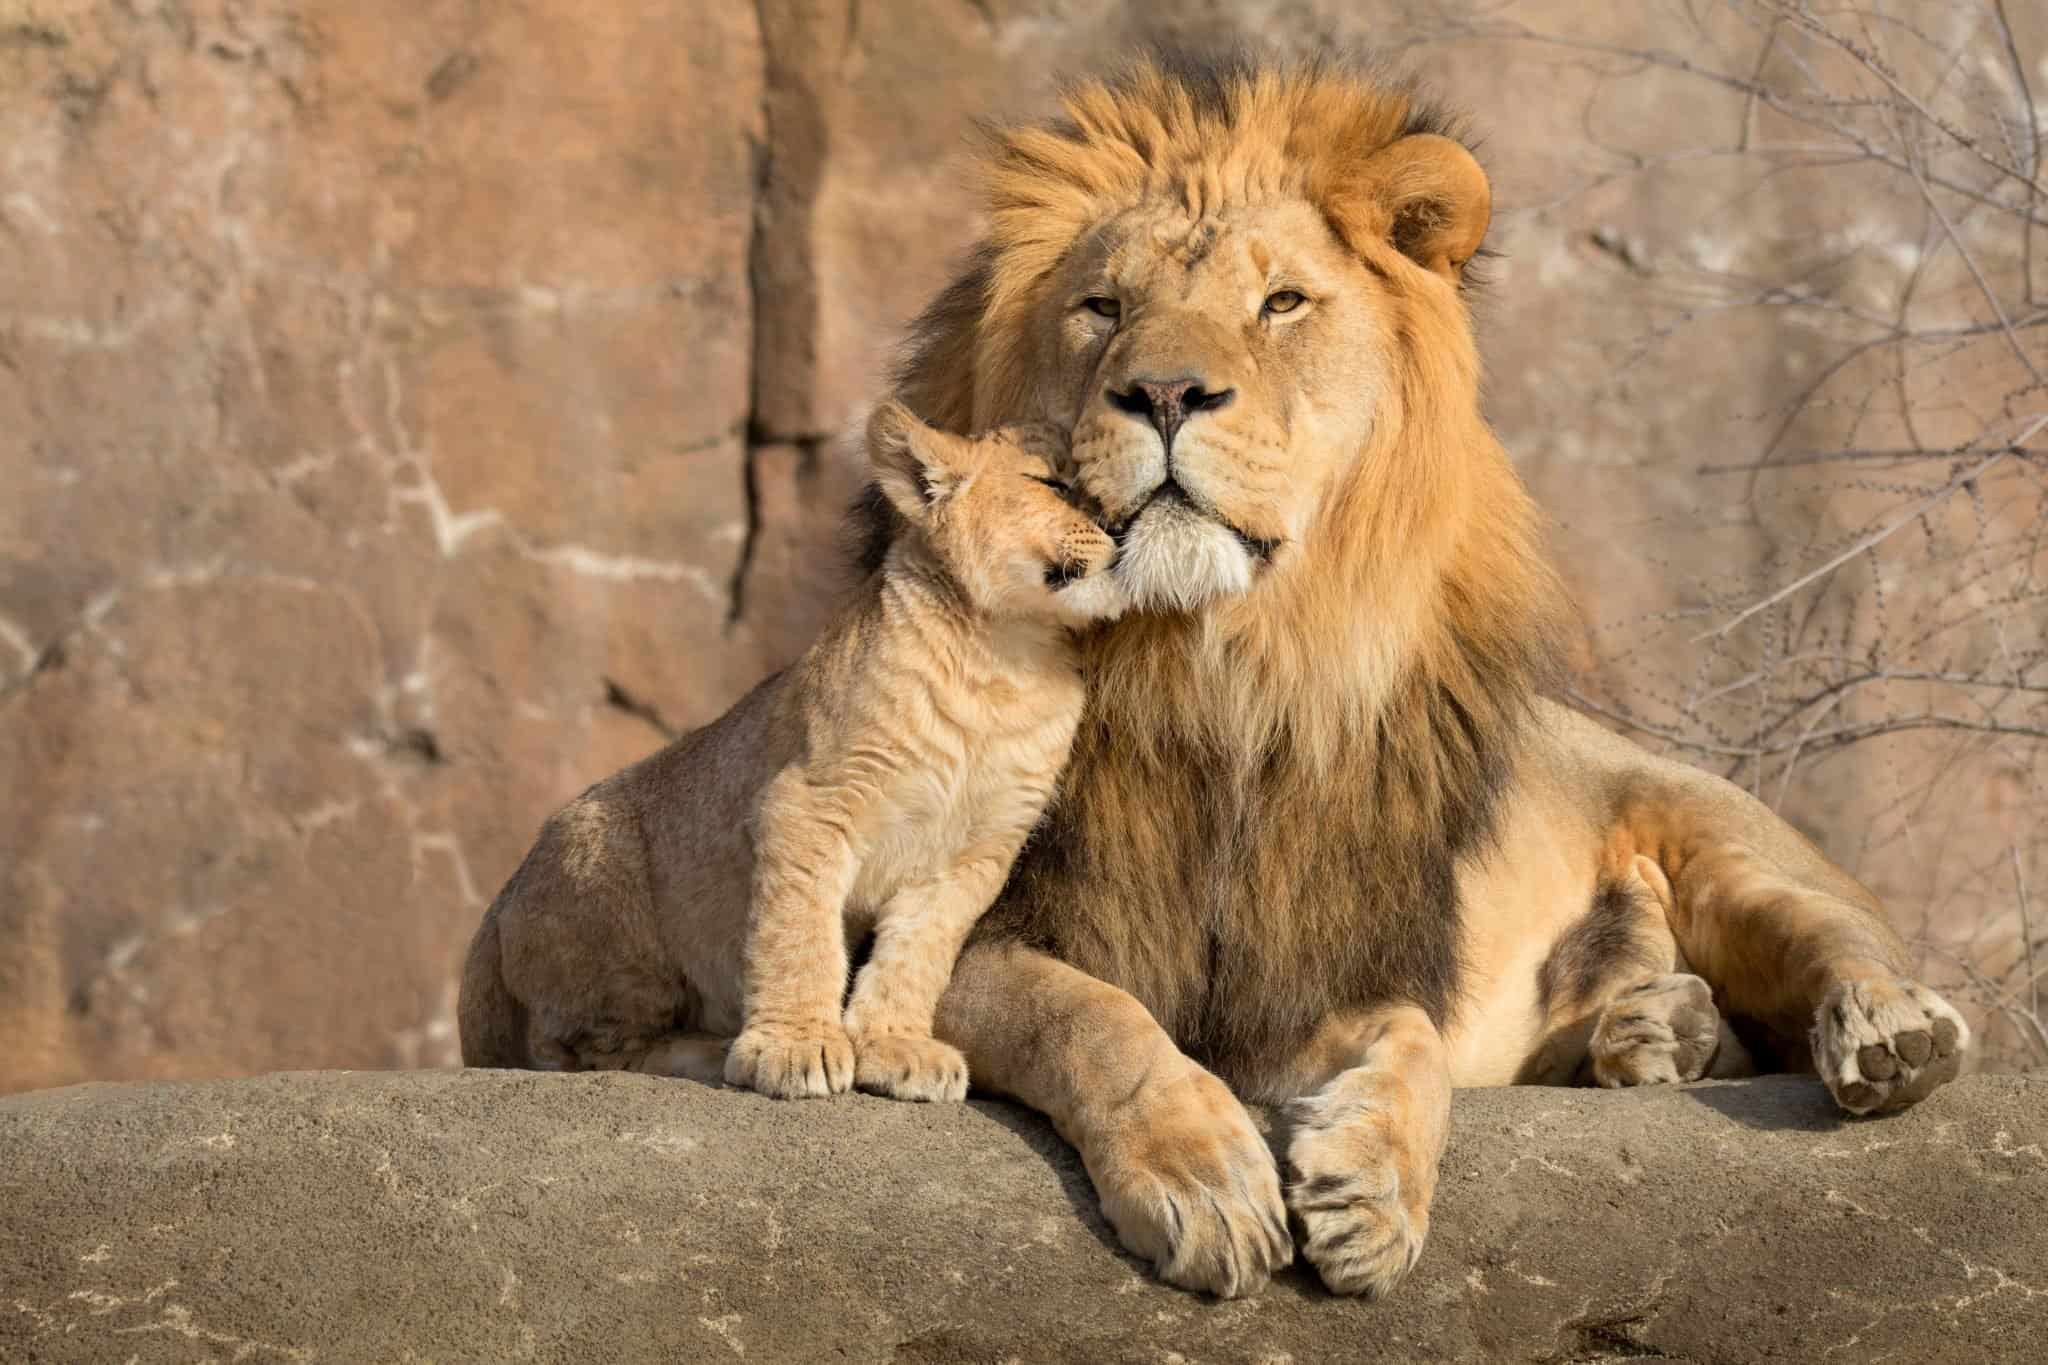 Safari Park Owner Caught on Video Punching Lion